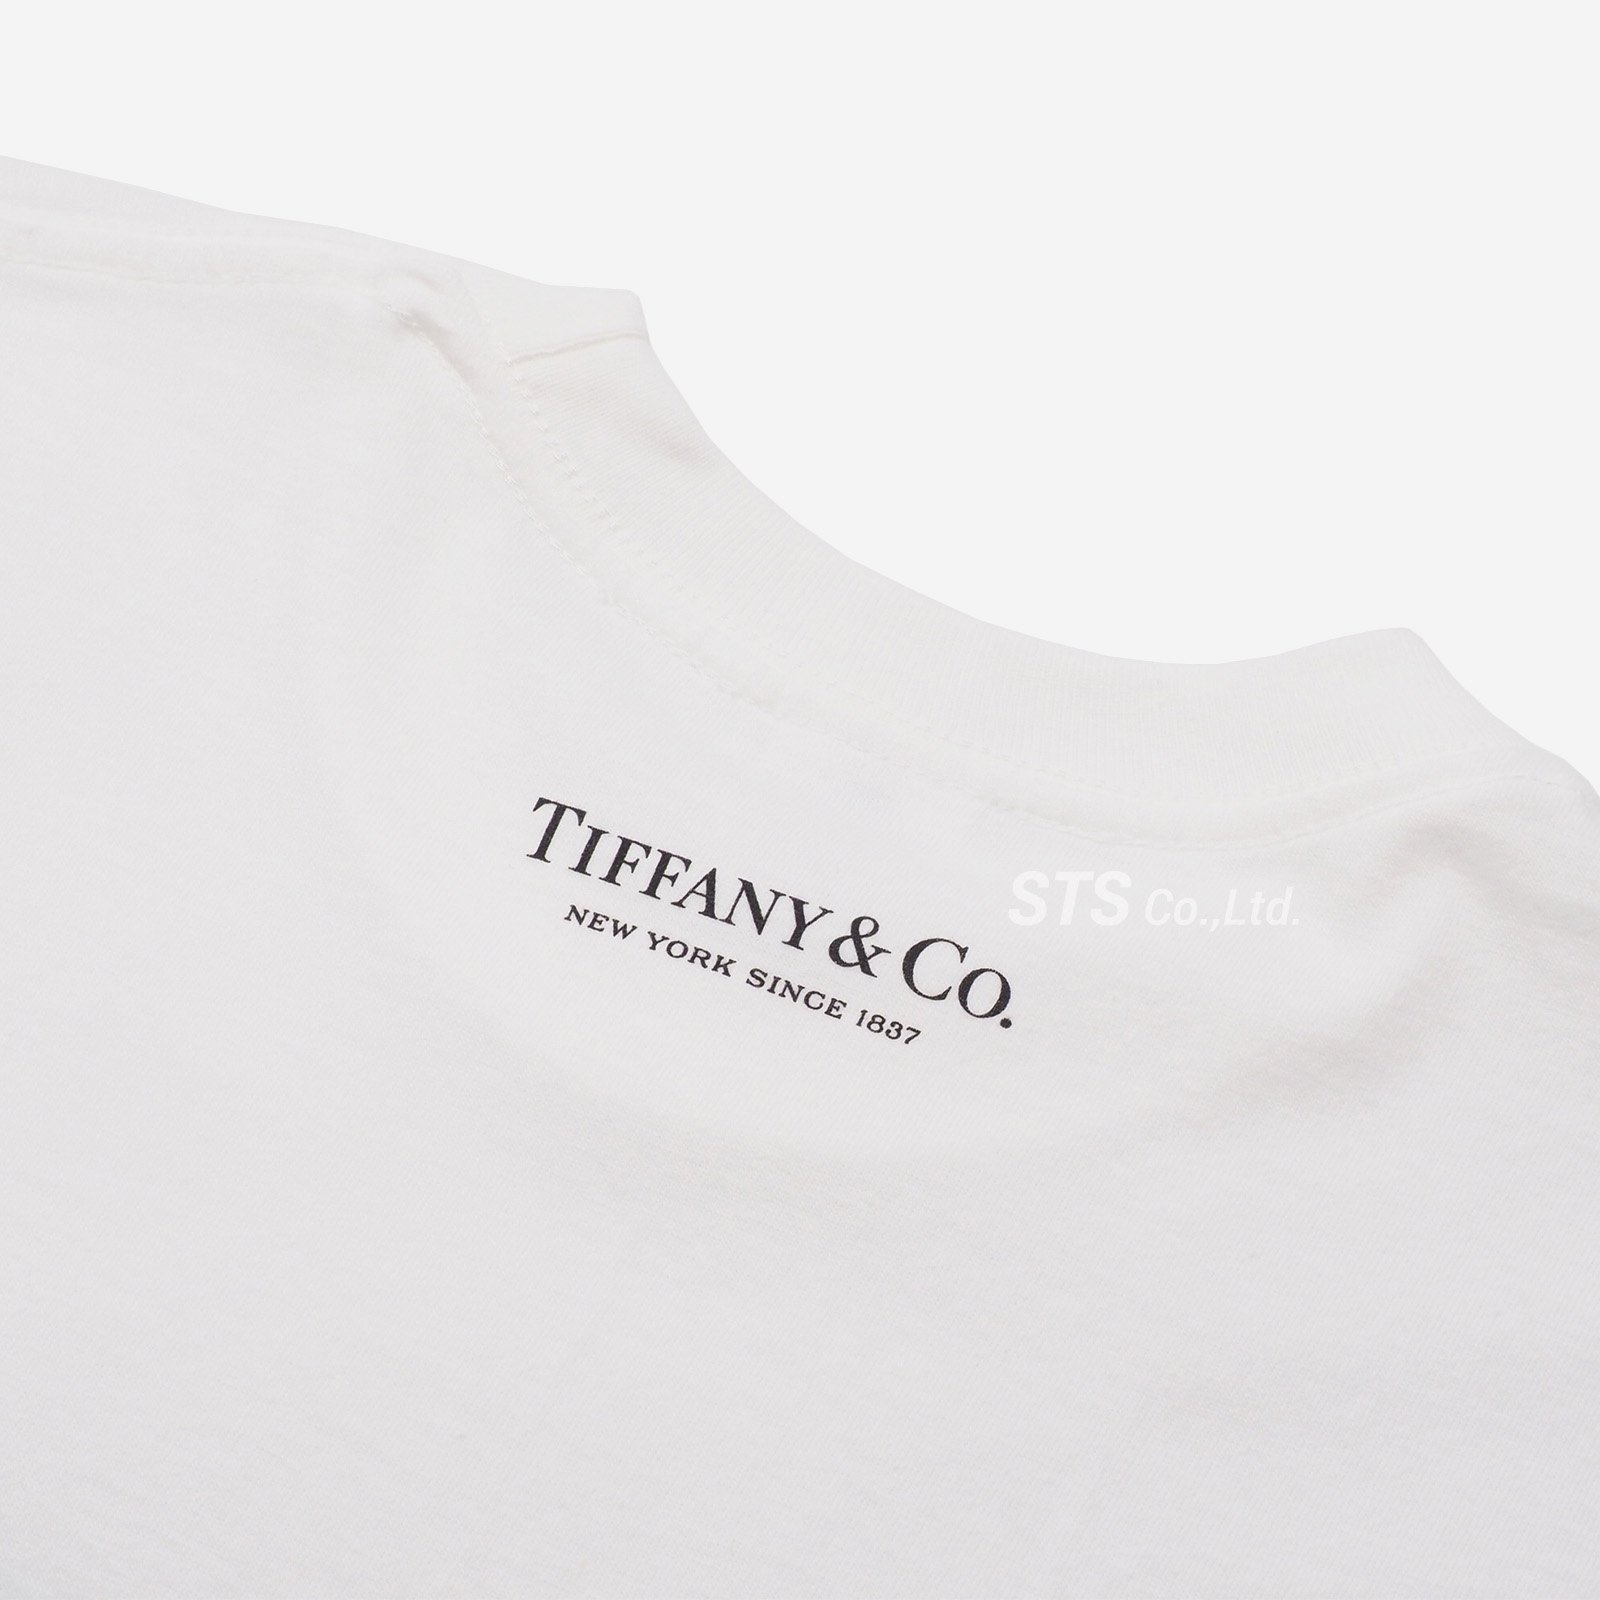 S×2 Supreme®/Tiffany & Co. Box Logo Tee